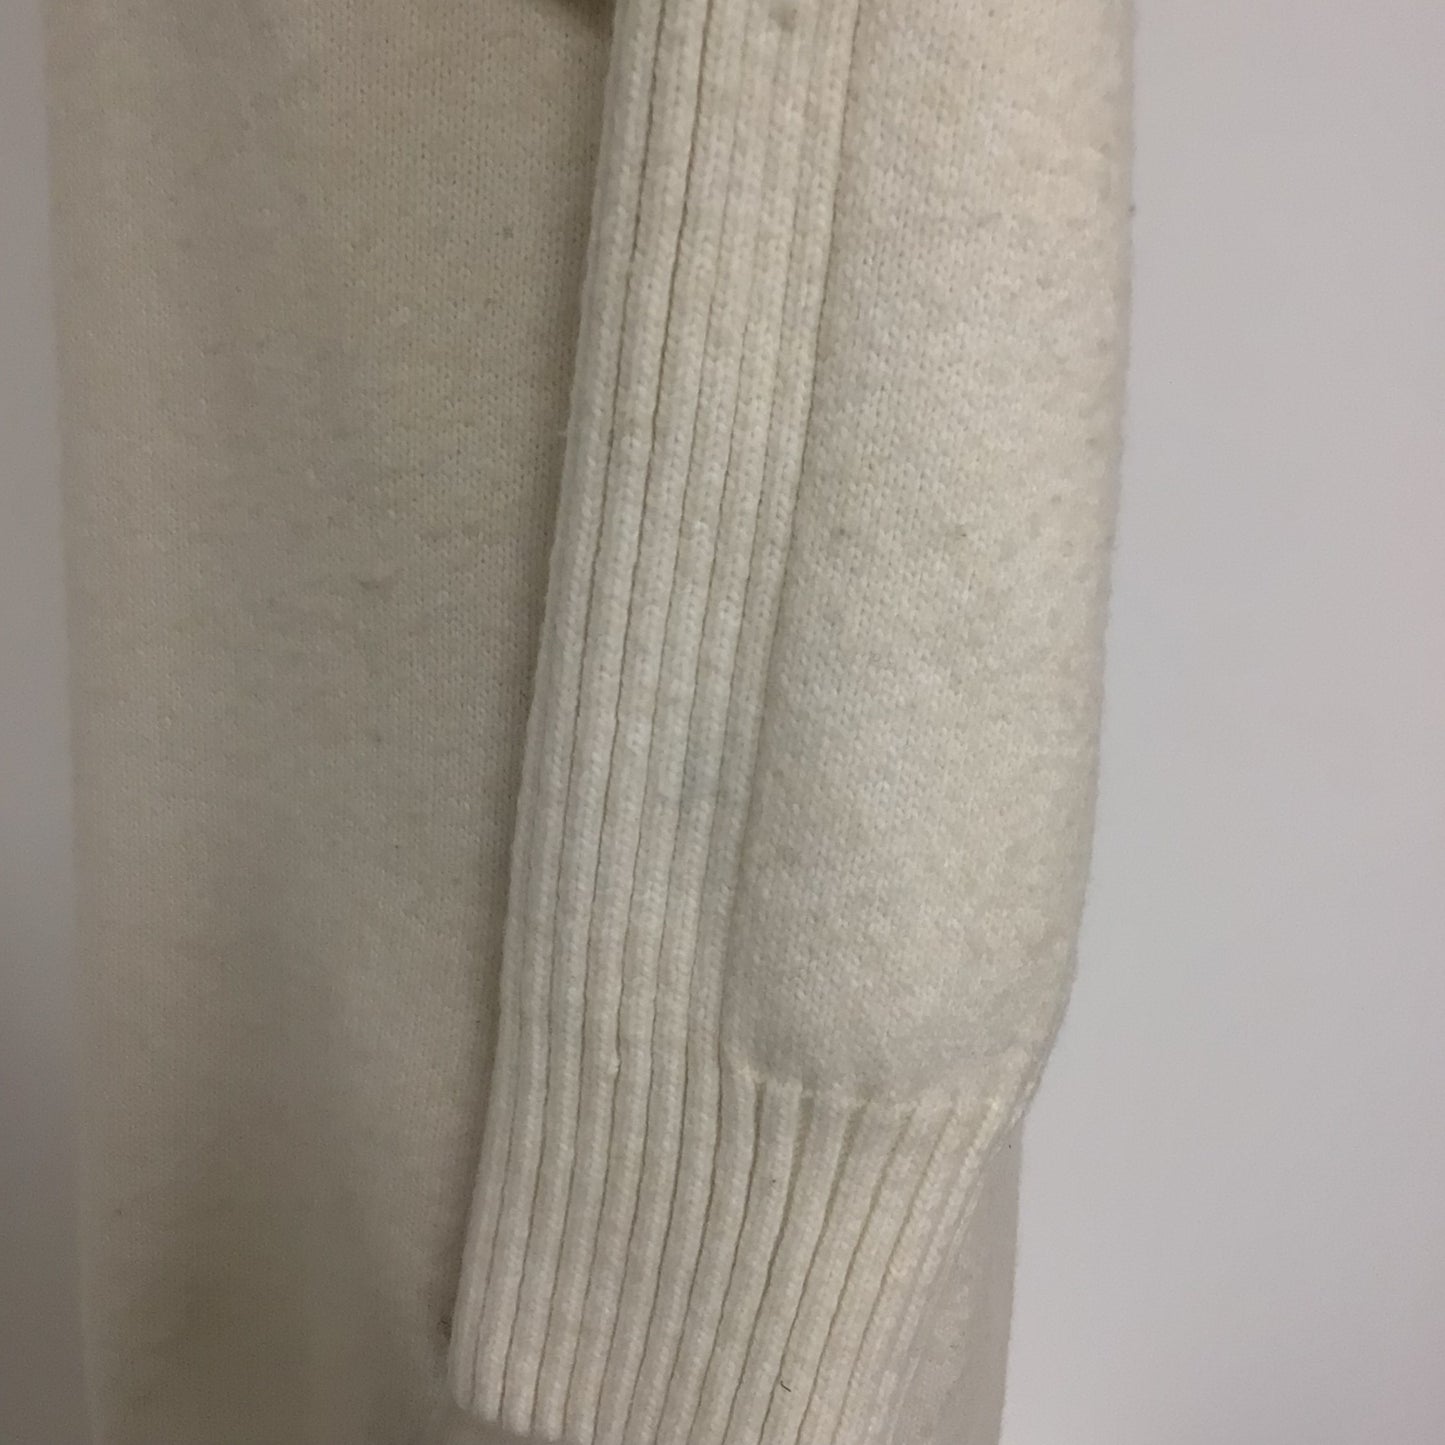 Pringle x H&M Long Sleeved Cream Jumper Dress Size S